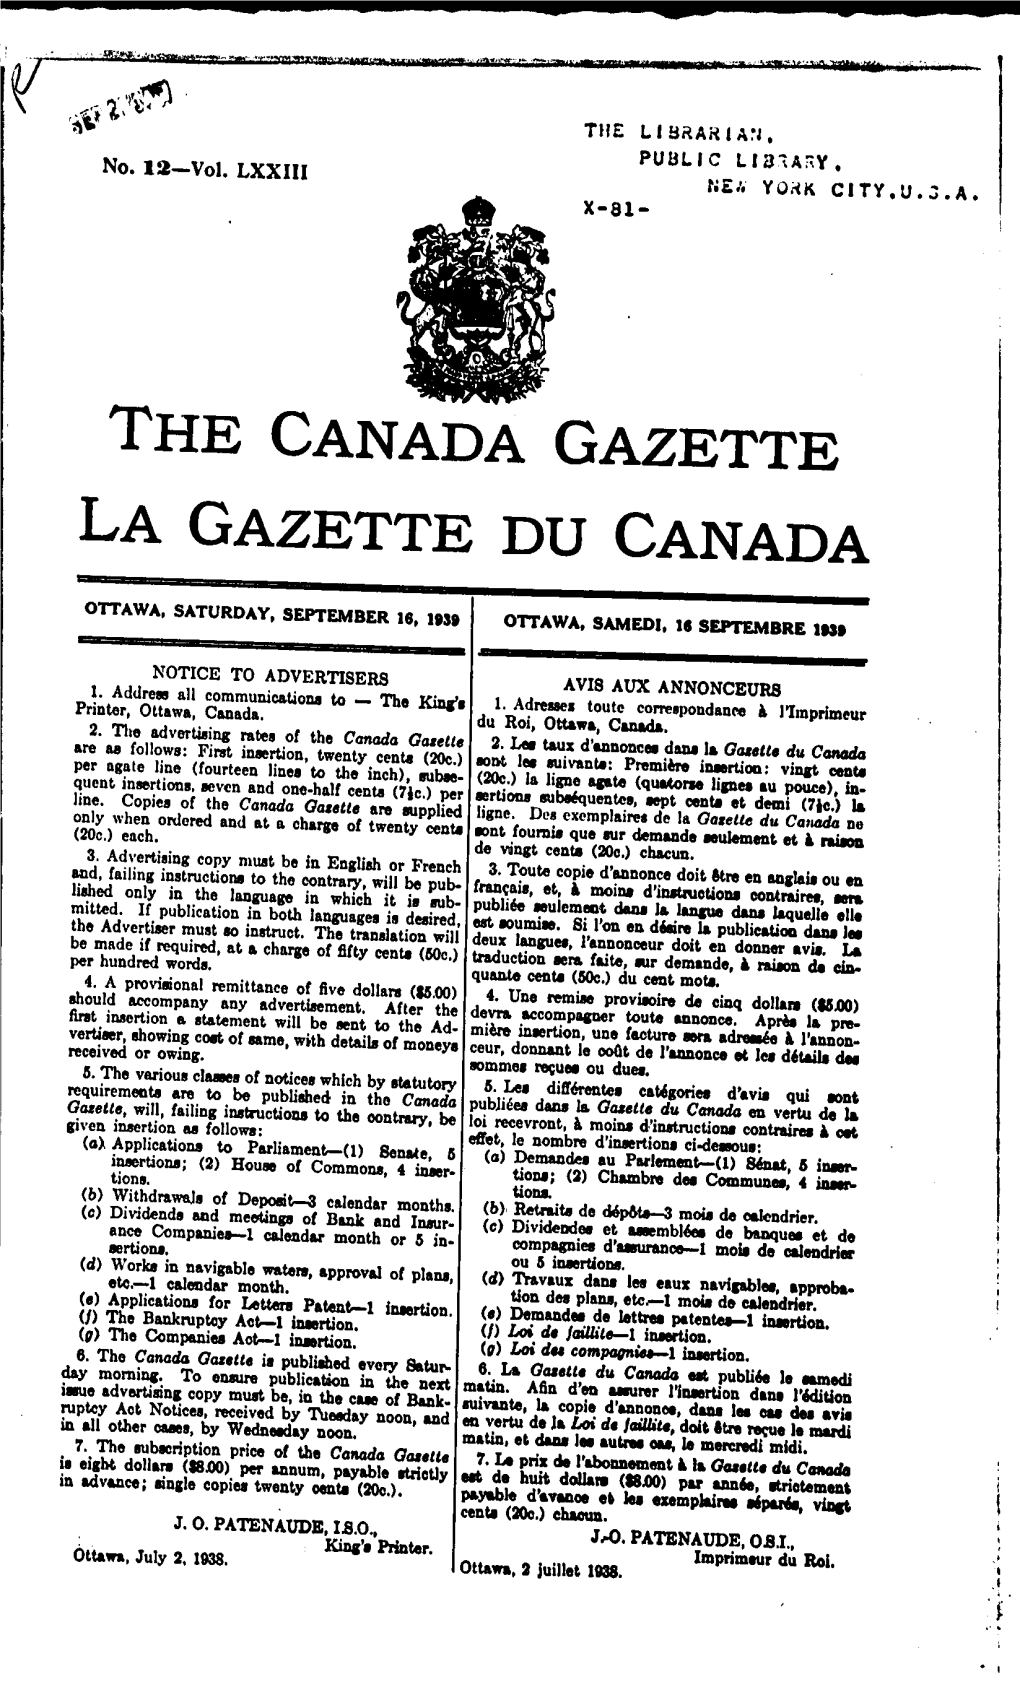 The Canada Gazette La Gazette Du Canada